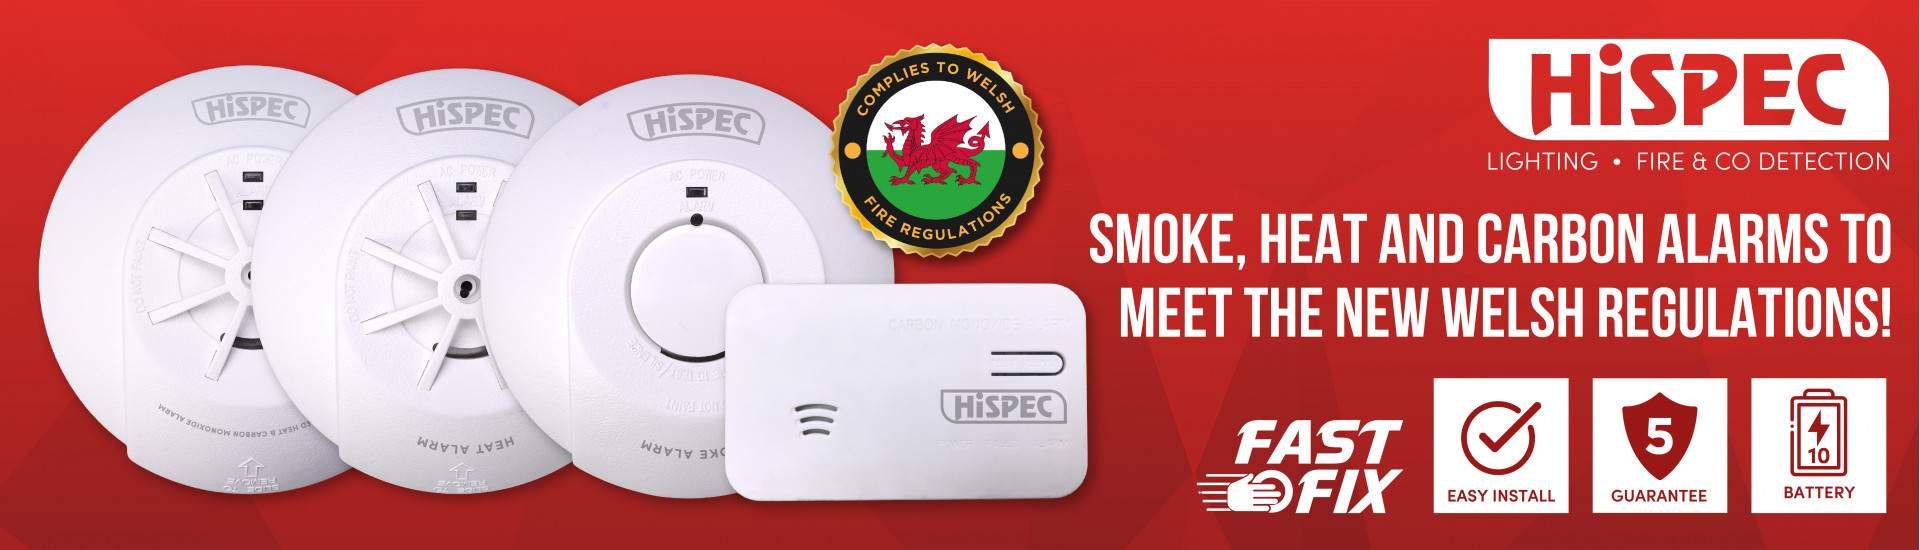 Hispec Welsh Fire Regulations 